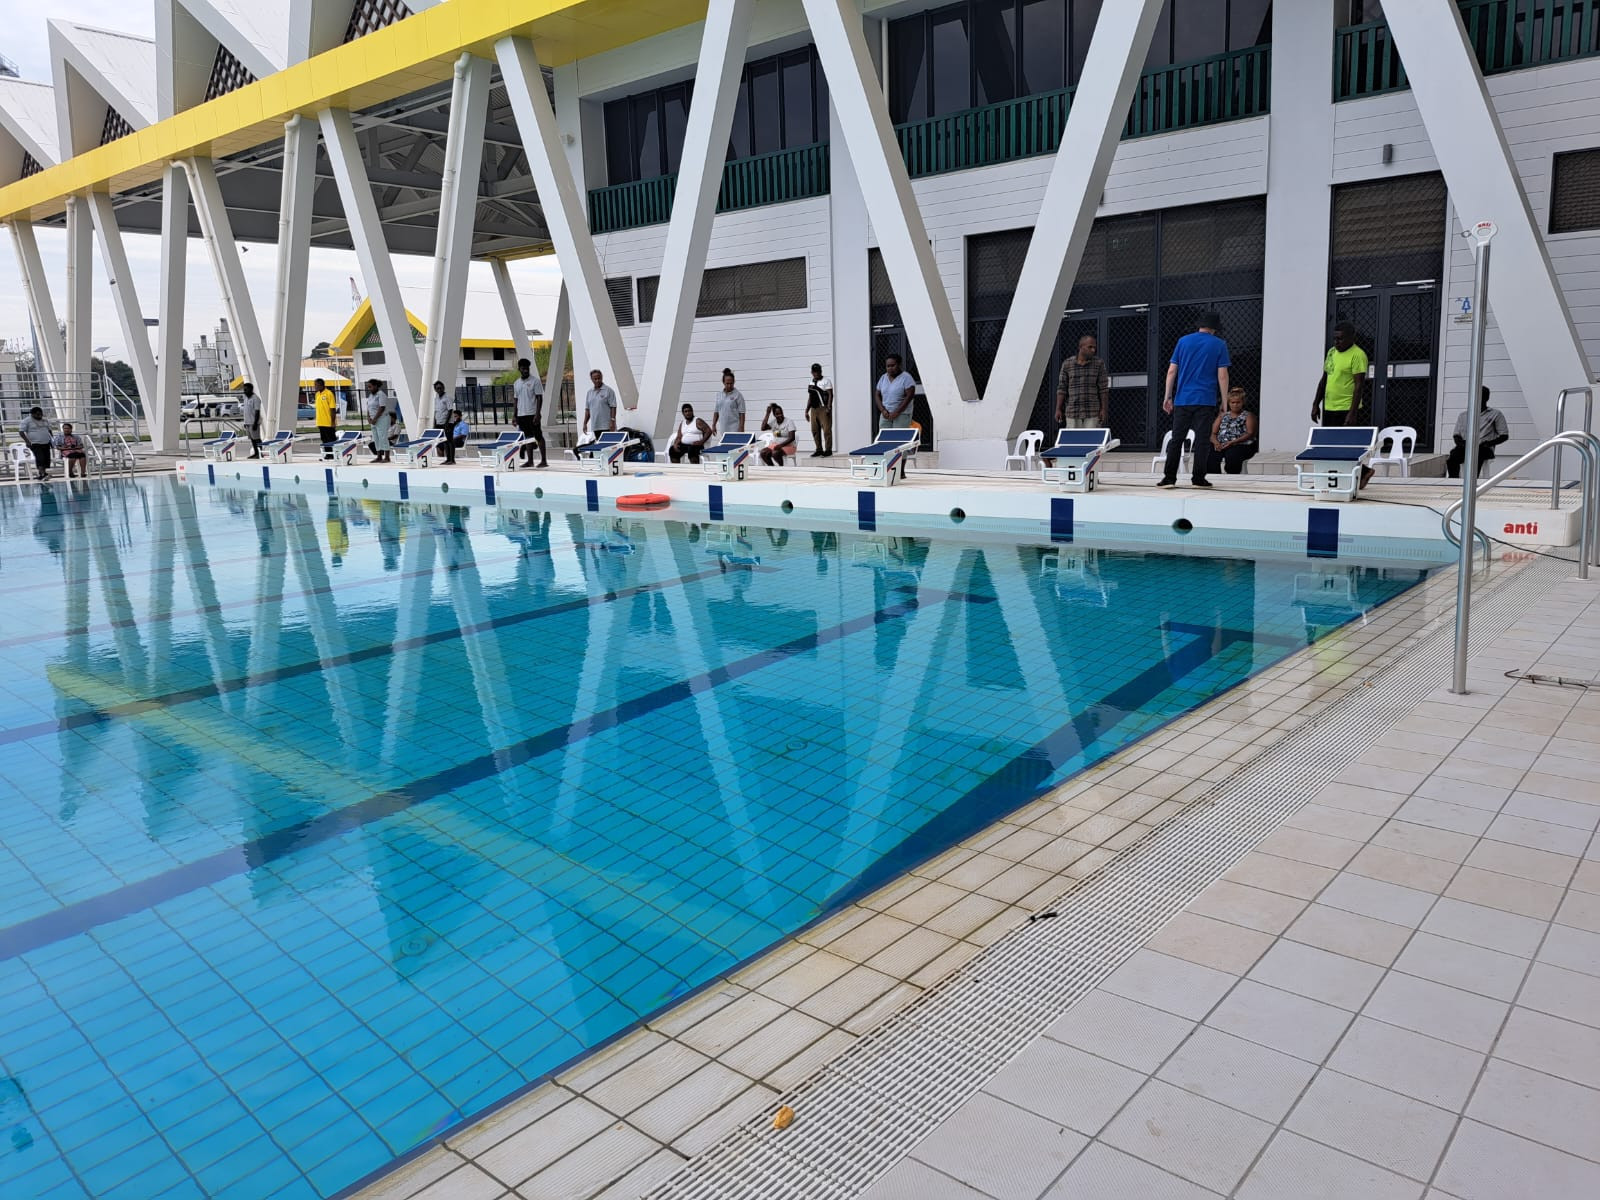 Swimming officials set for Solomon Islands 2023 after World Aquatics training